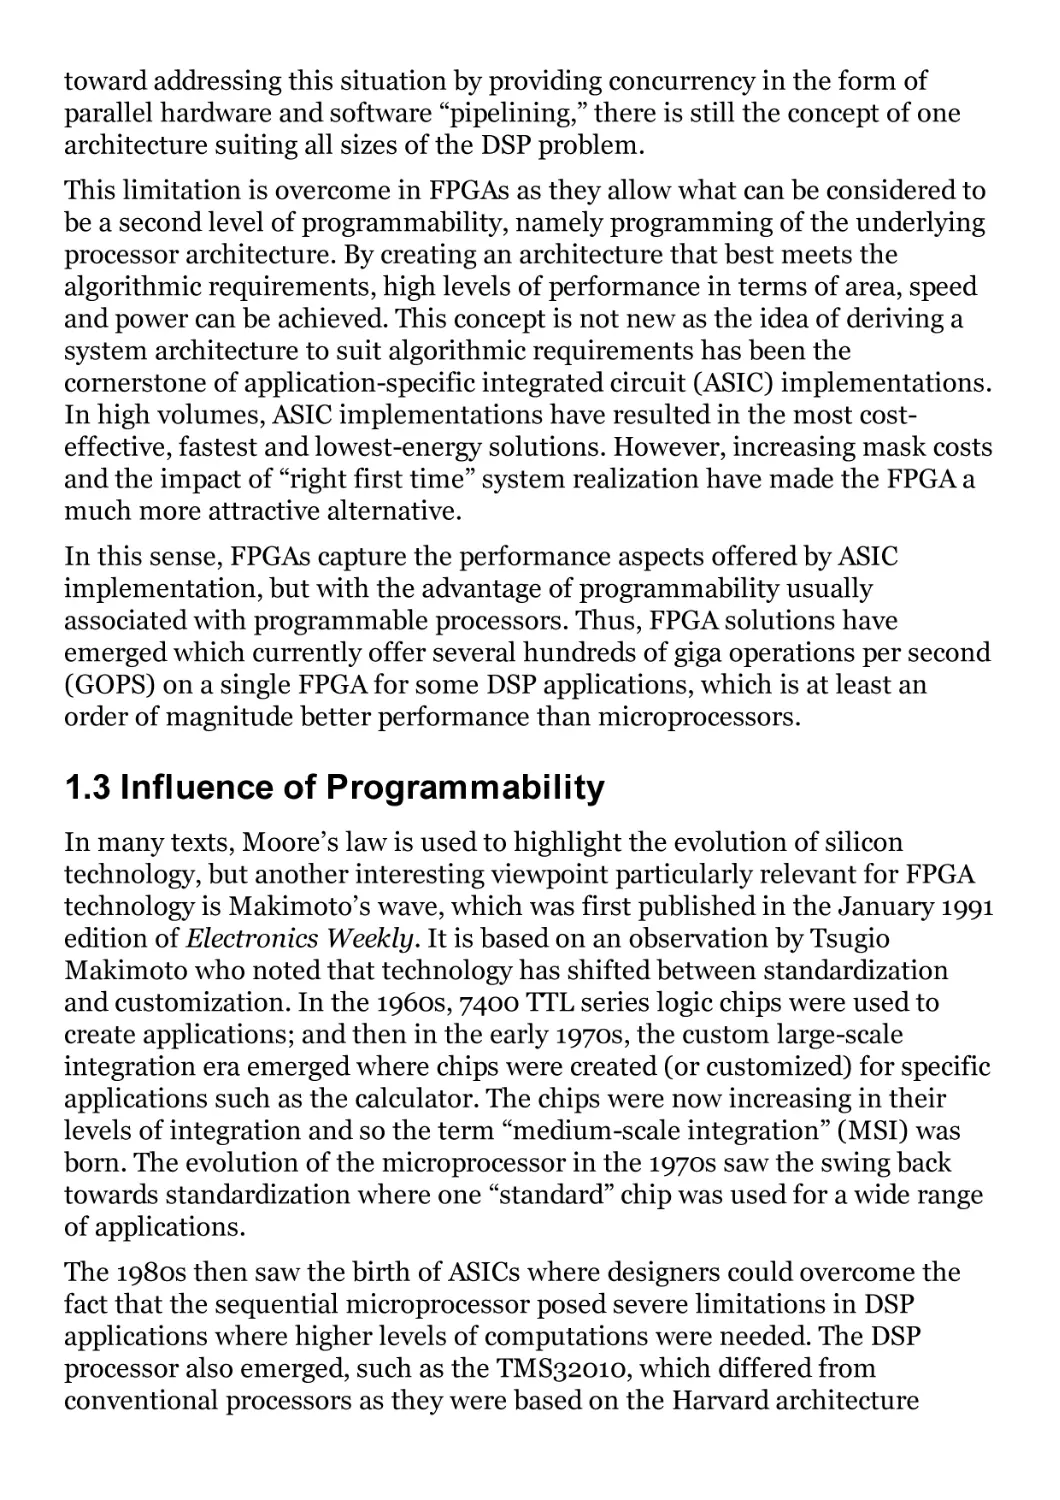 1.3 Influence of Programmability